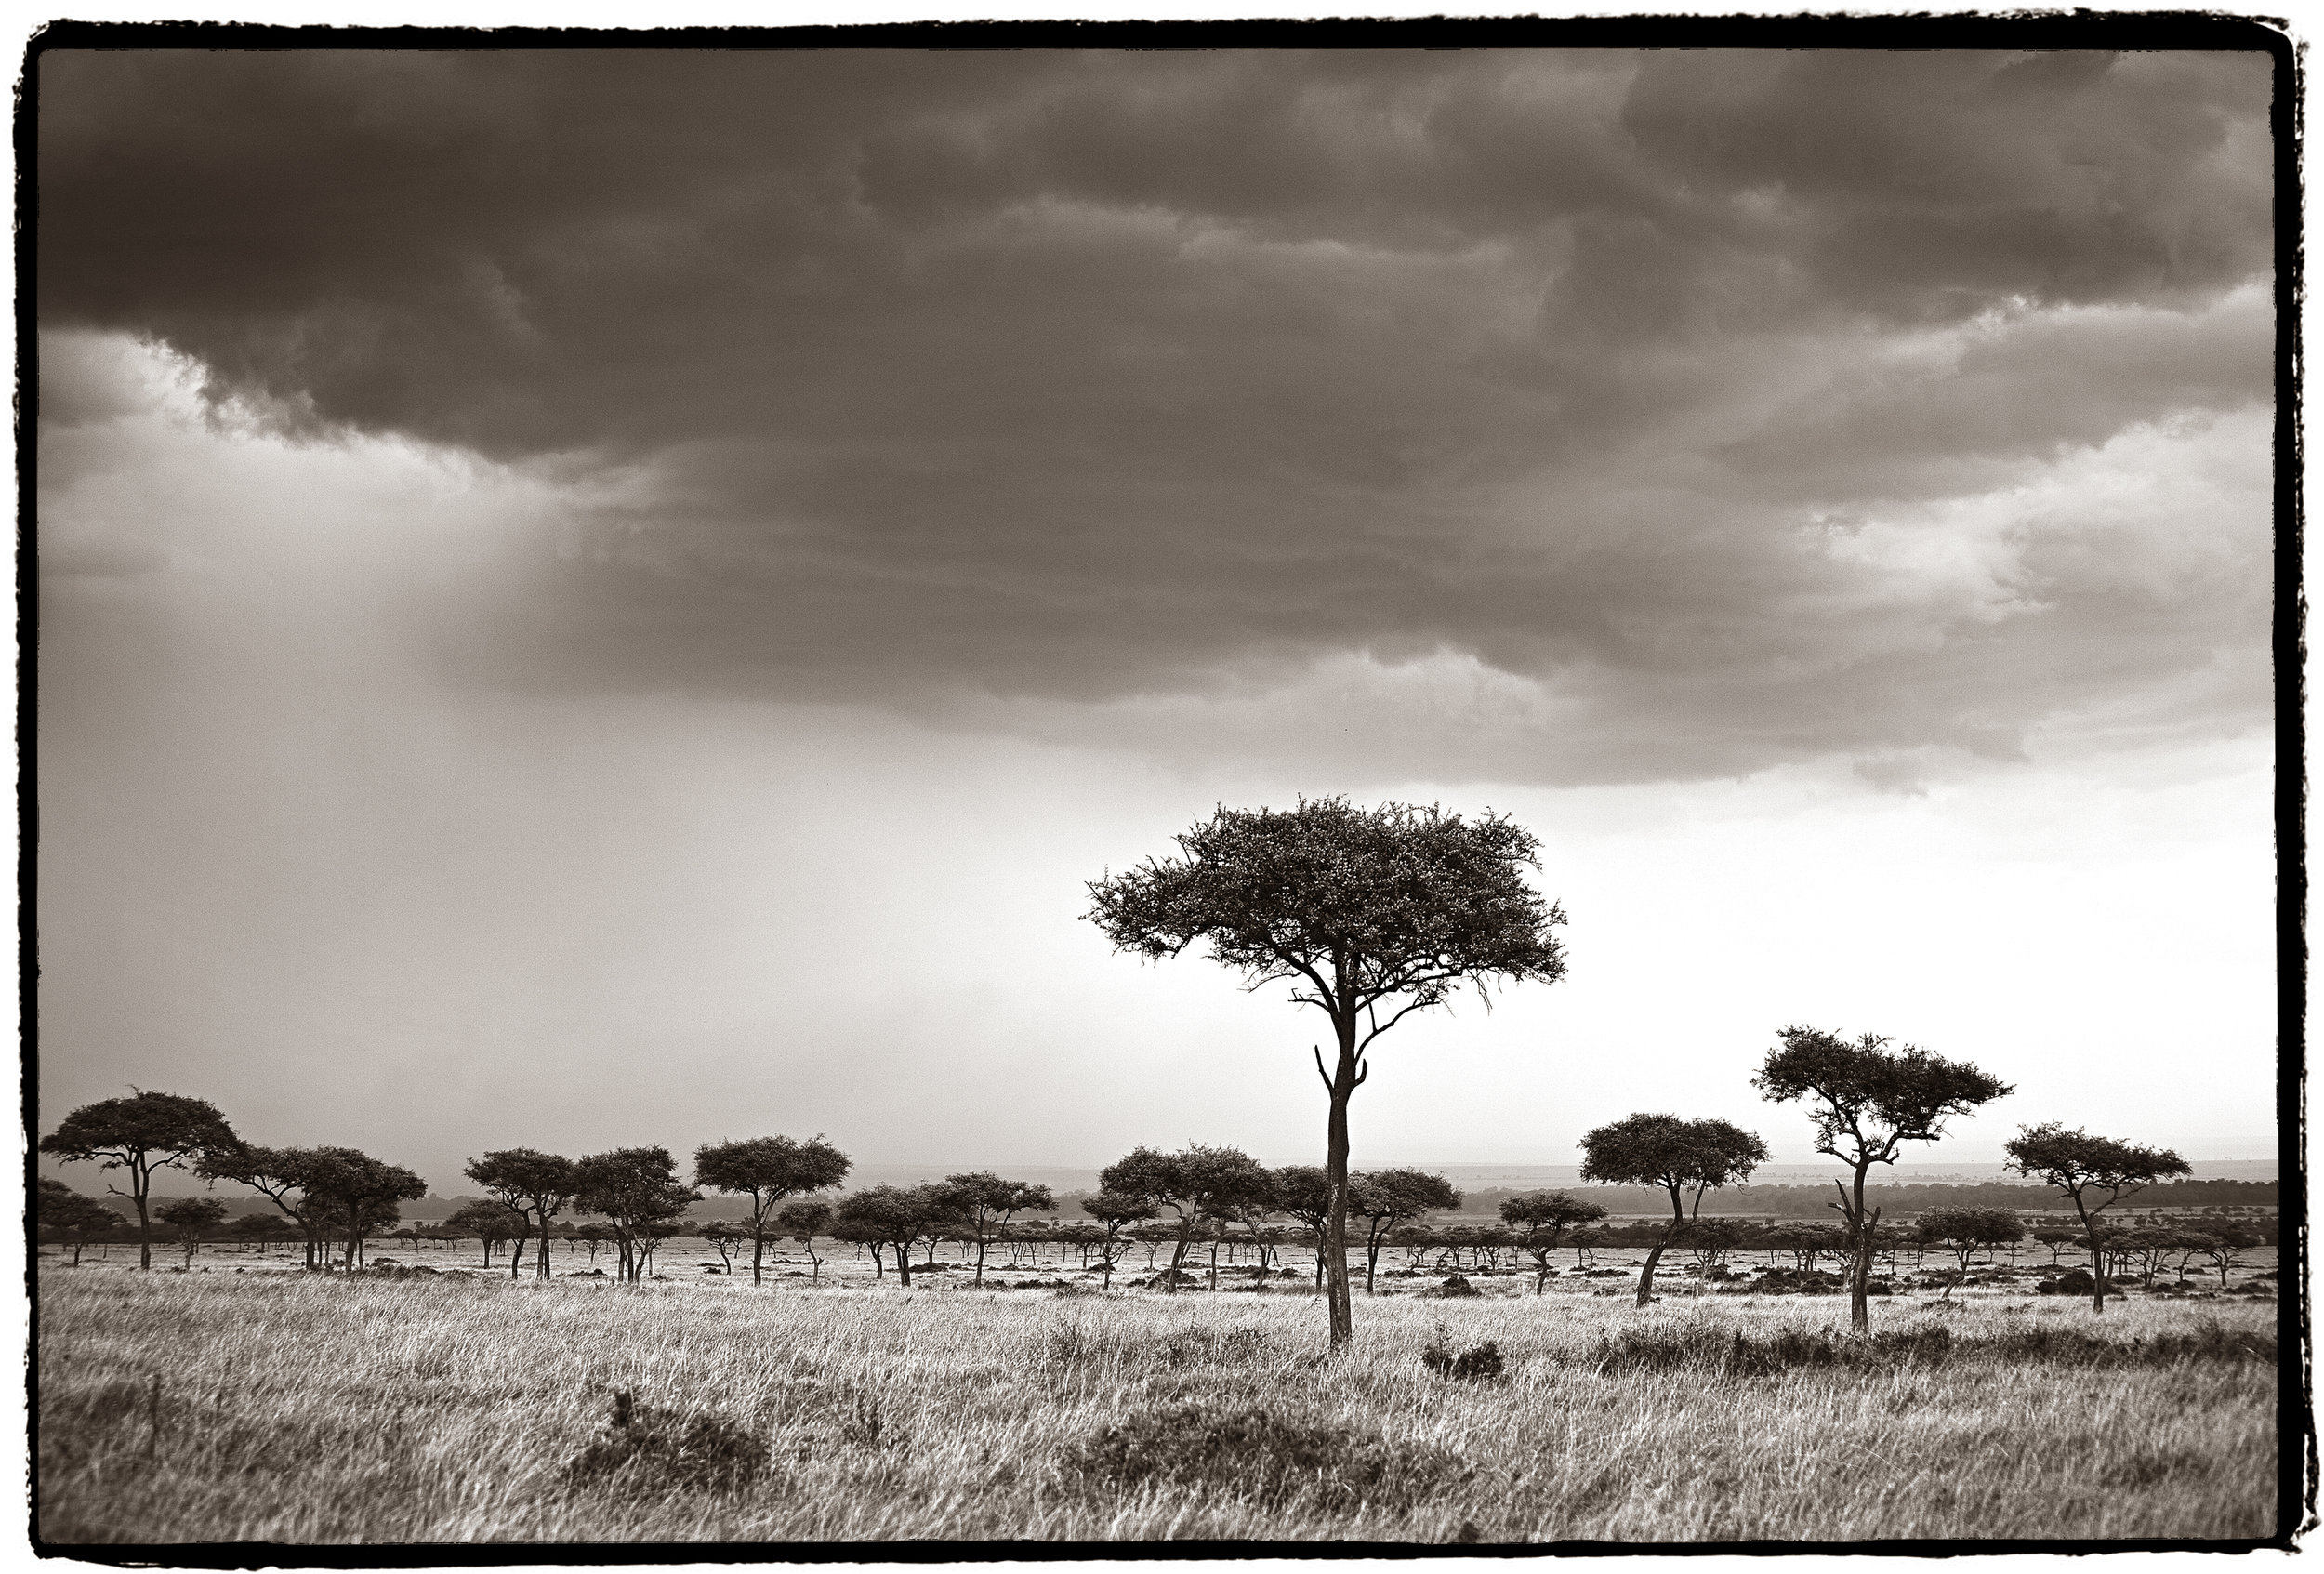 Rainstorm in Masai Mara